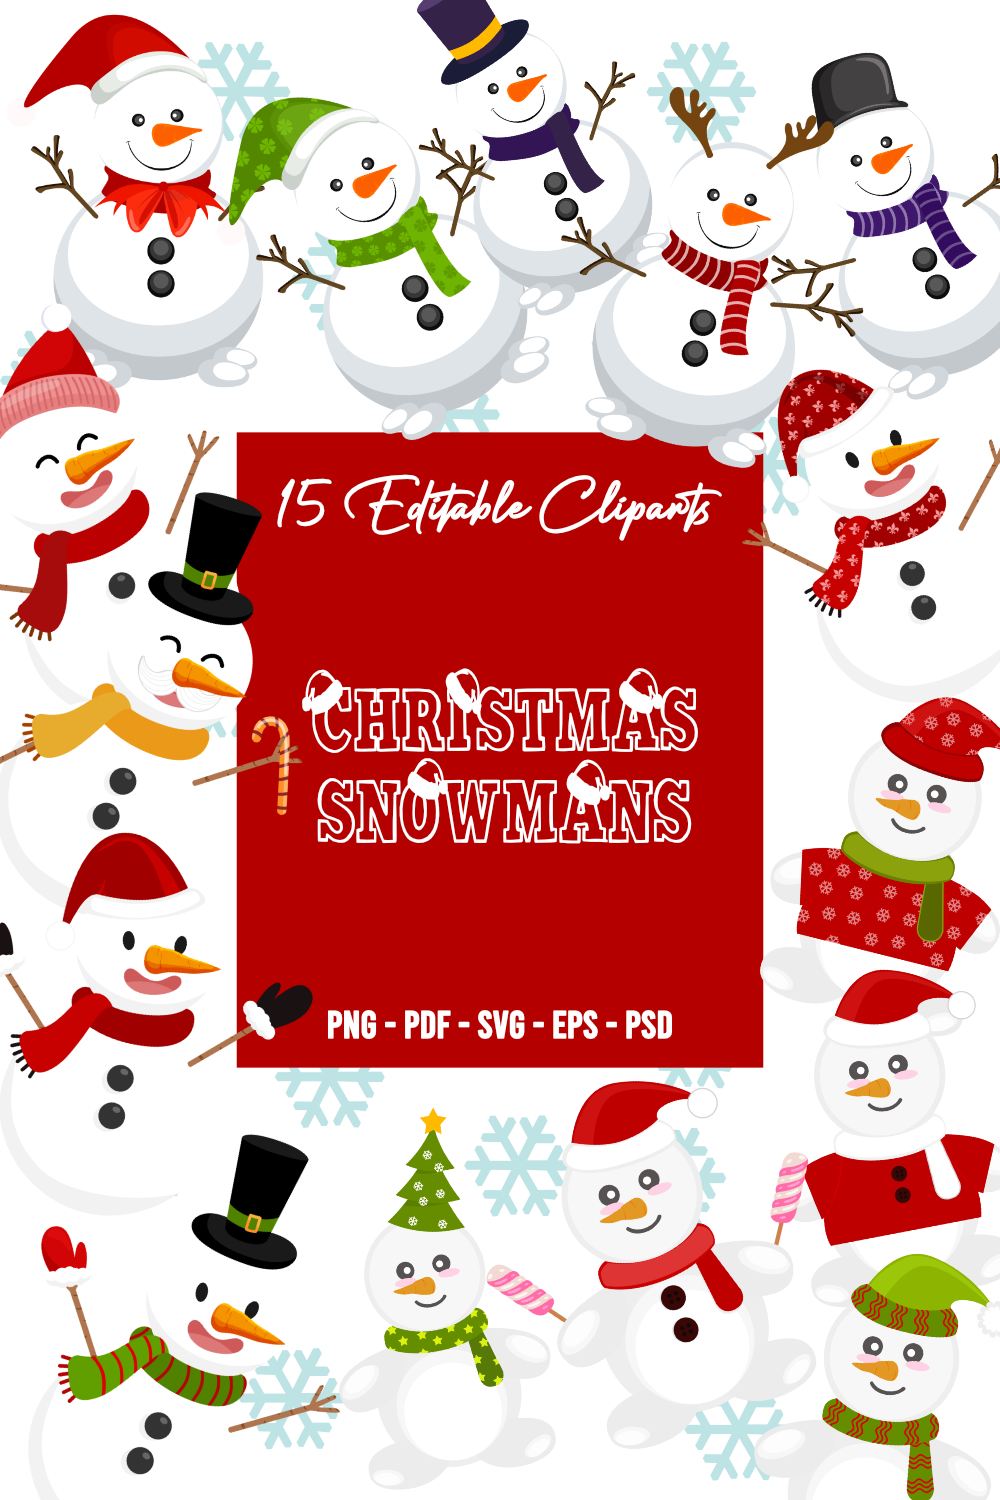 15 Christmas Snowman Cliparts pinterest image.